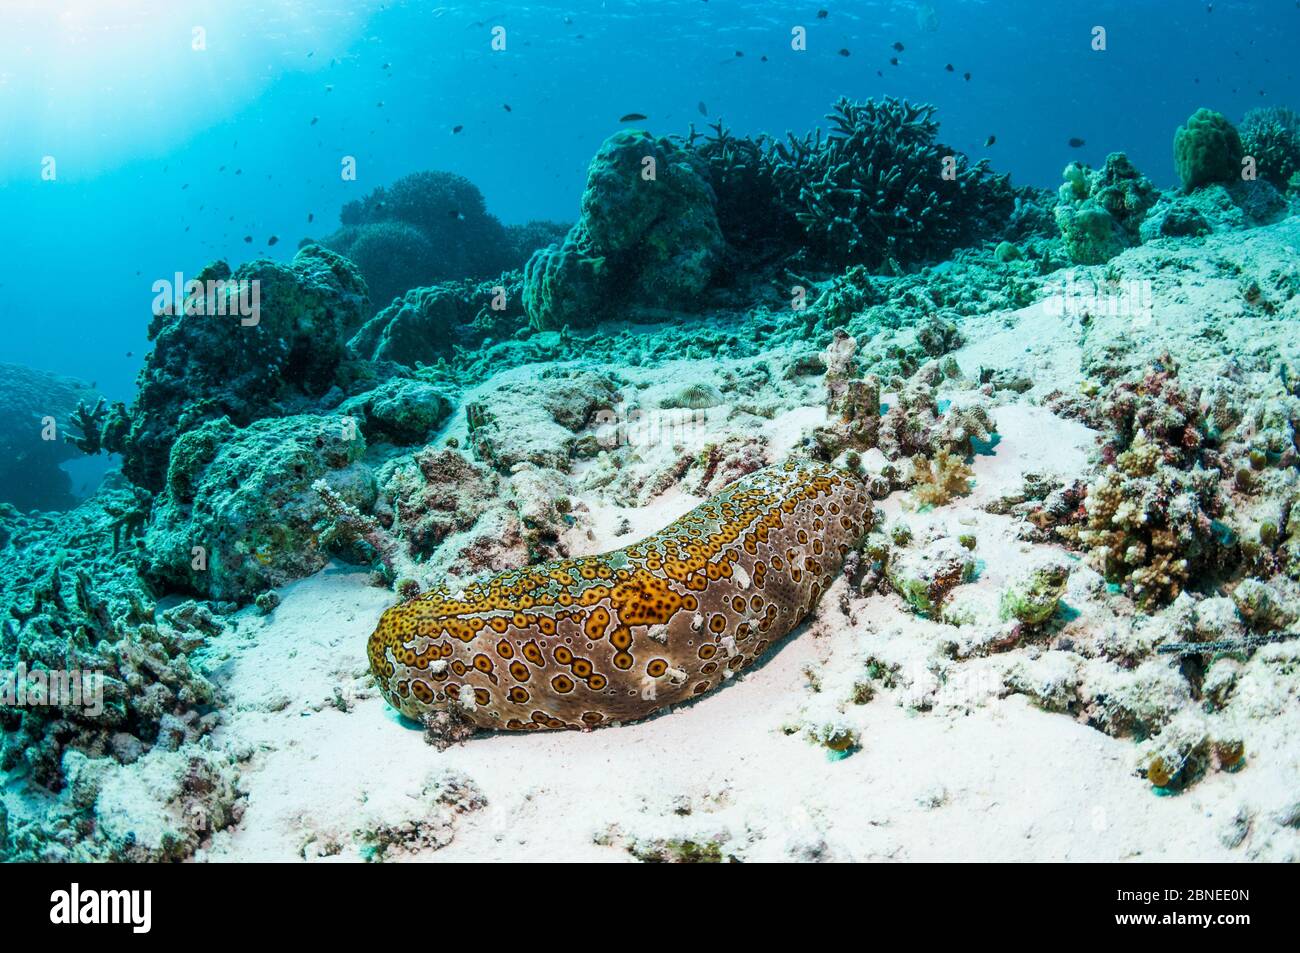 Eyed sea cucumber (Bohadschia argus) on sandy reef slope. Similan Islands, Andaman Sea, Thailand. Stock Photo